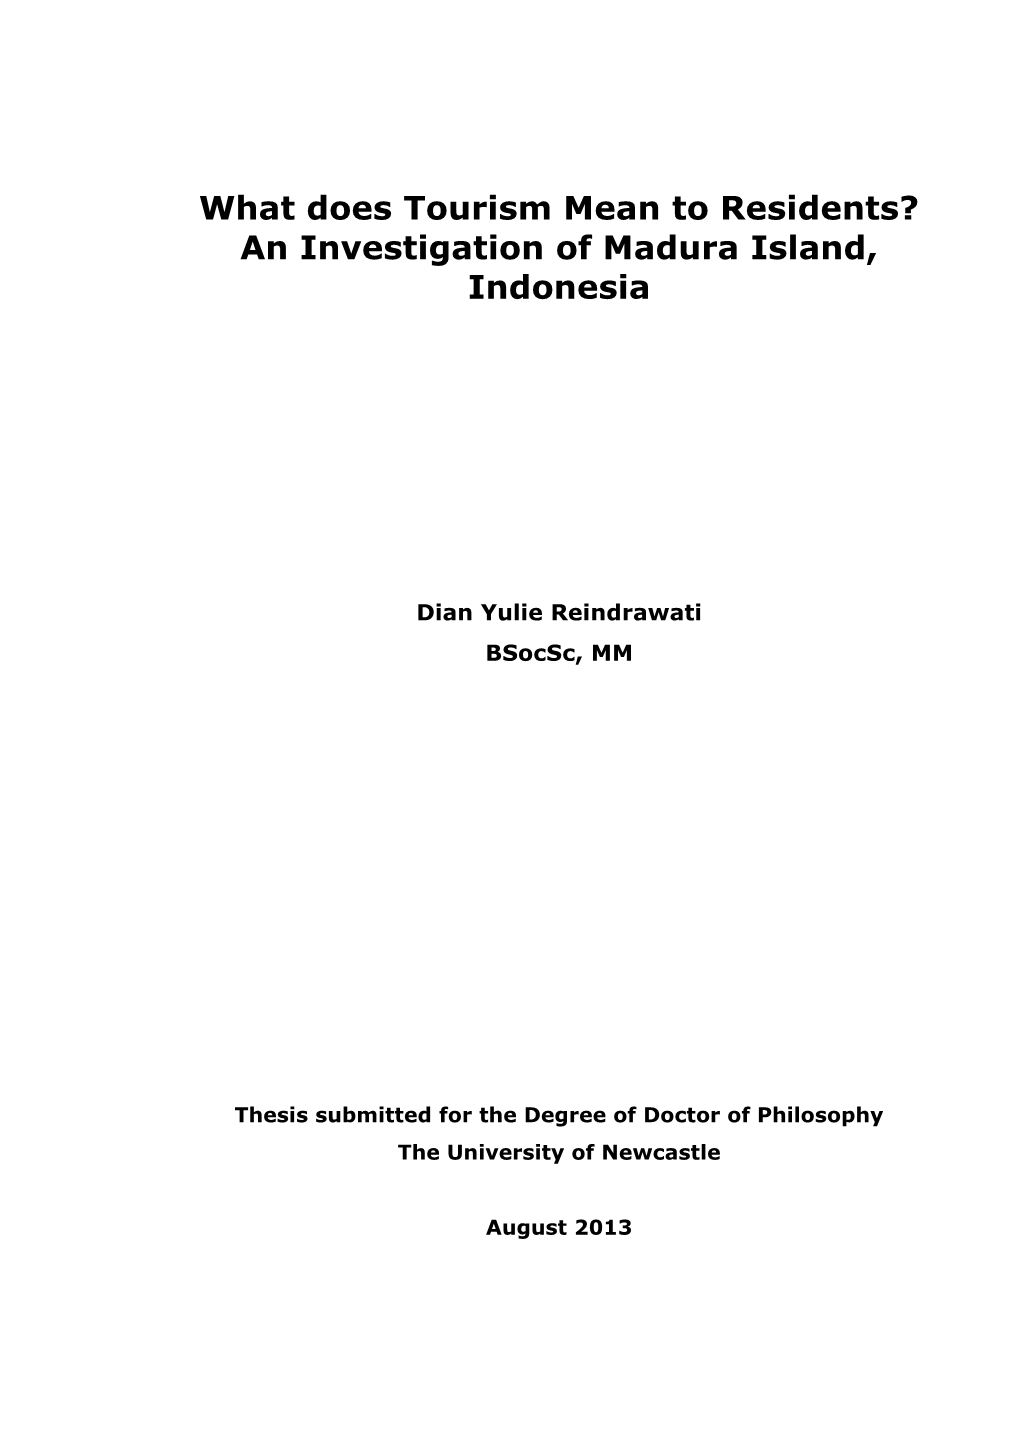 An Investigation of Madura Island, Indonesia